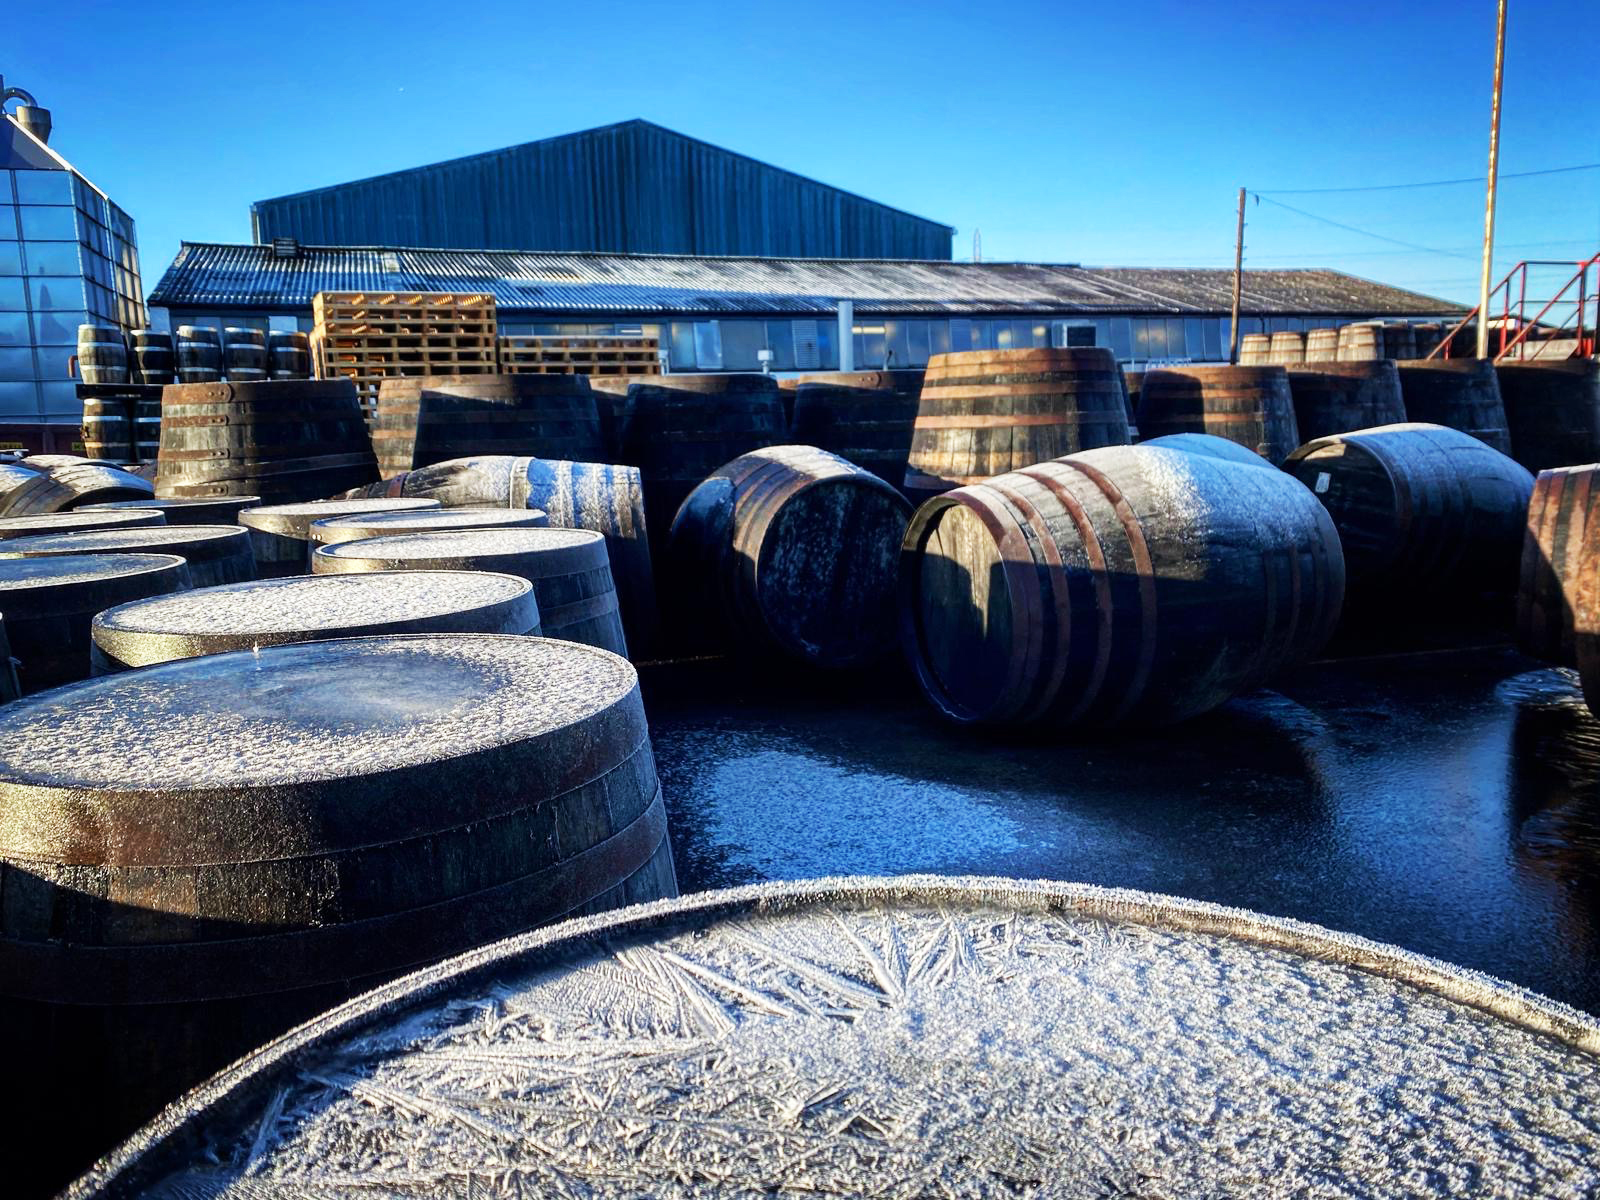 Glasgow Whisky Distillery Casks